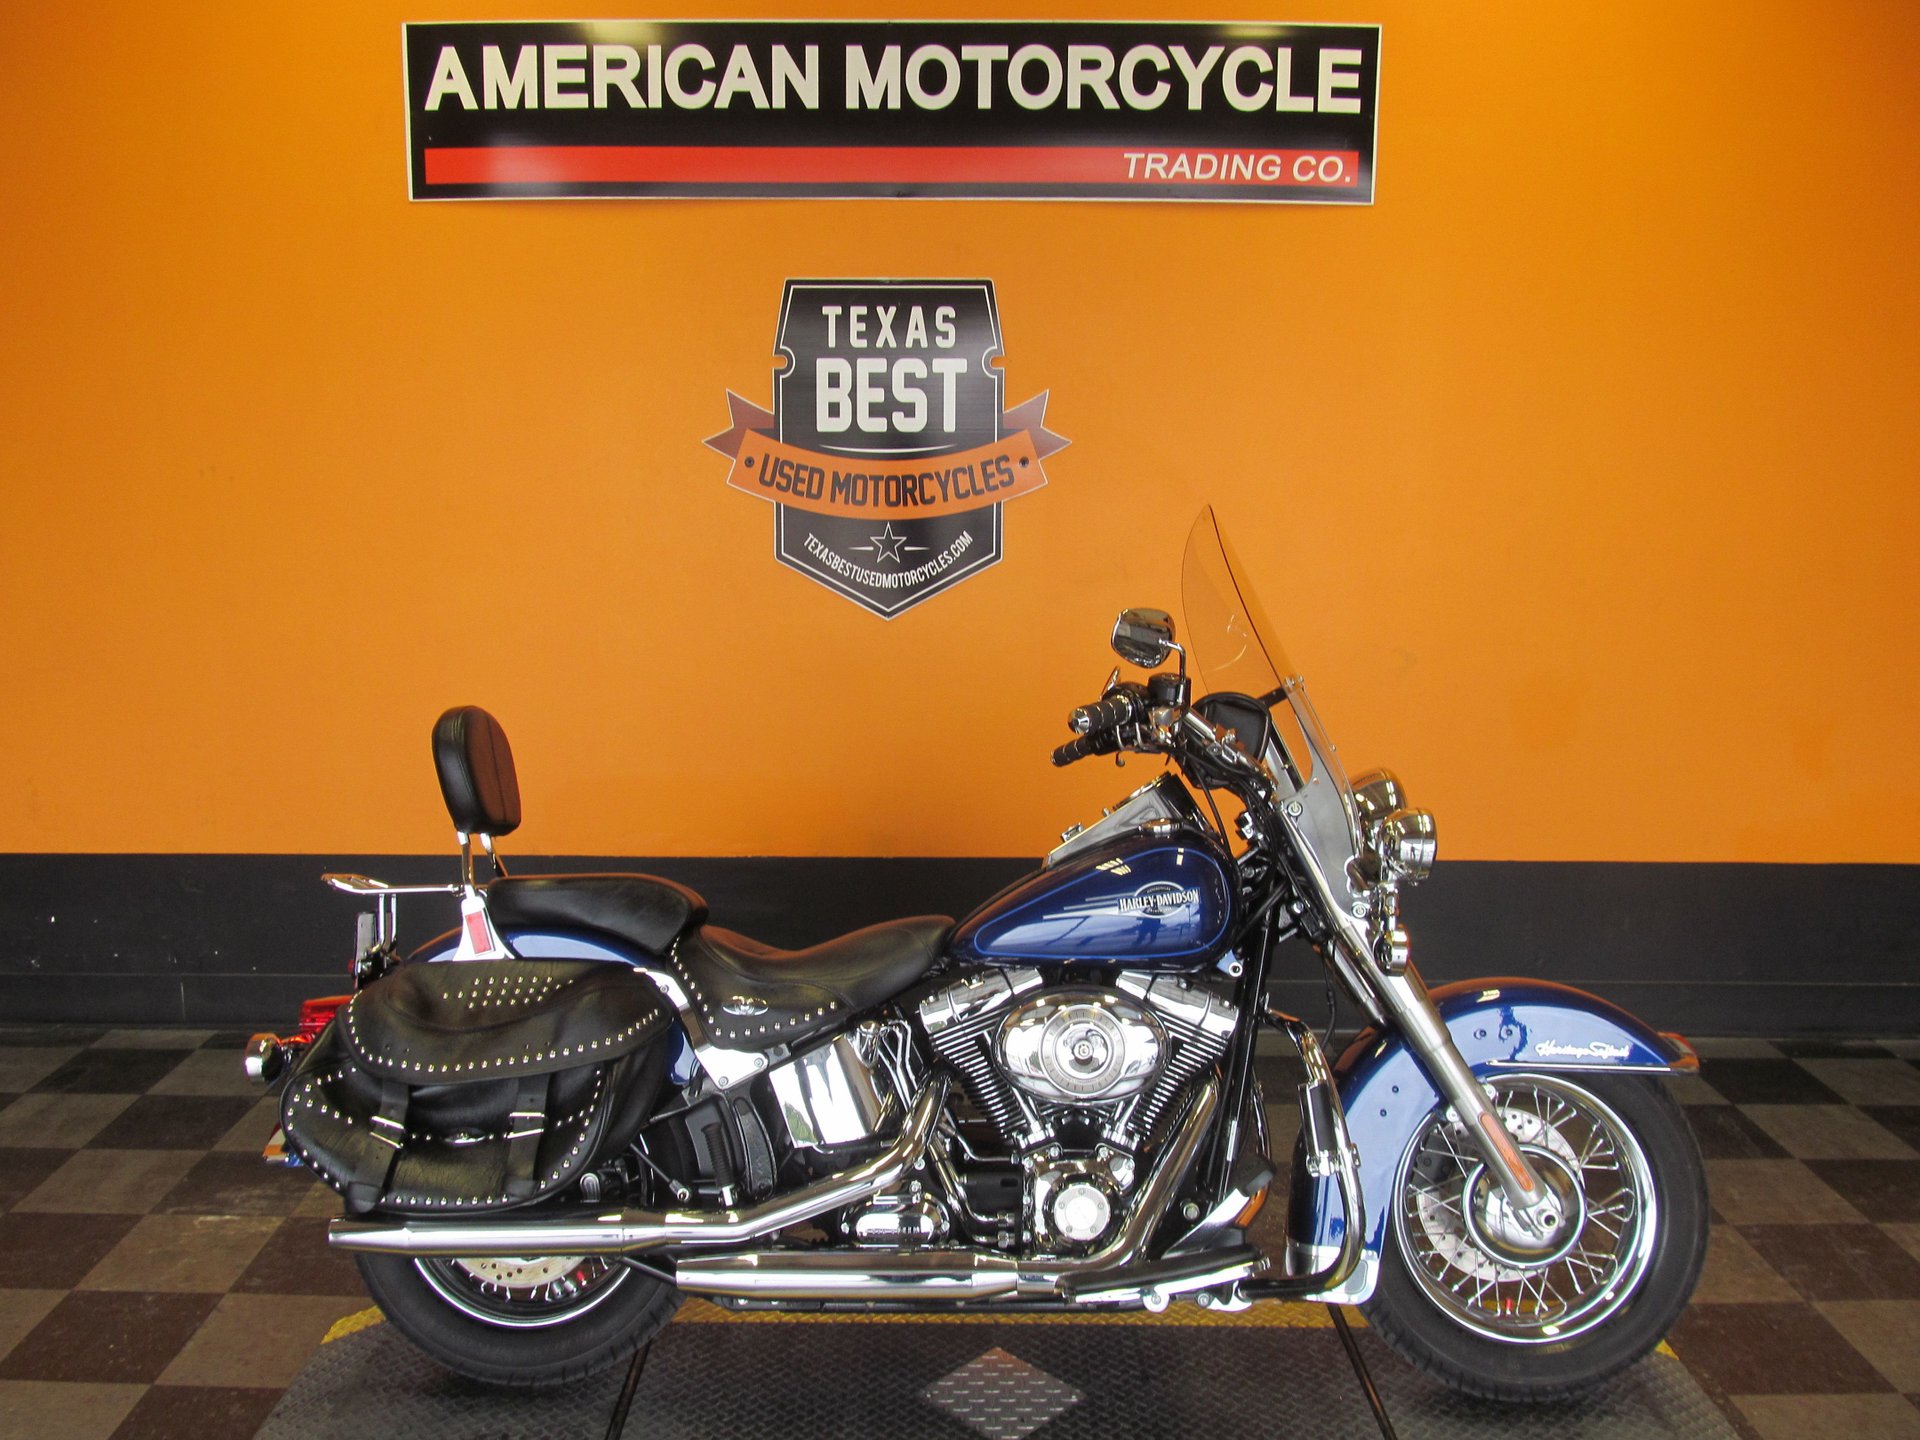 2007 Harley-Davidson | American Motorcycle Trading Company ...